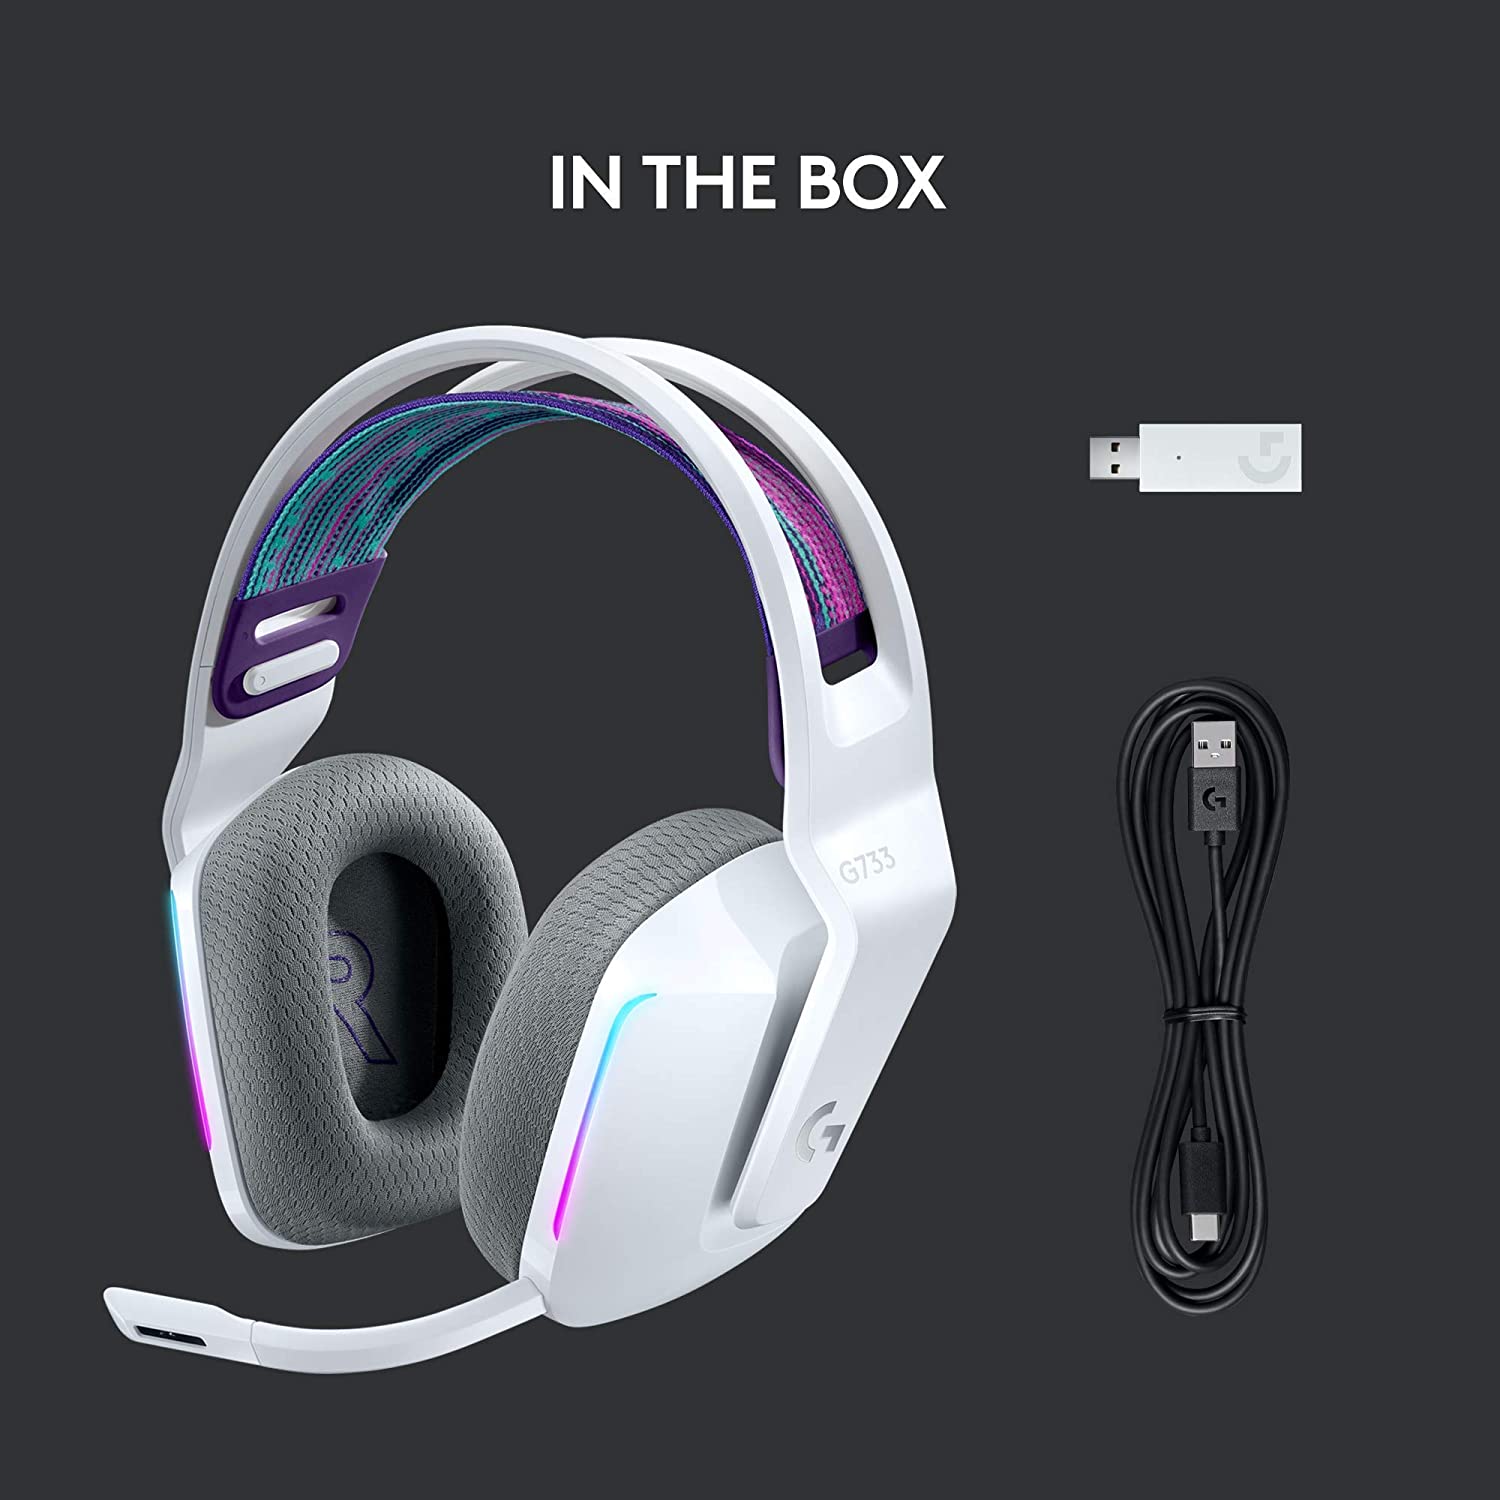 New] G733 Lightspeed Wireless Gaming Headset with Suspension Headband,  LIGHTSYNC RGB, Blue VO!CE mic Technology and PRO-G Audio Drivers - White  981-000882 | Lazada PH